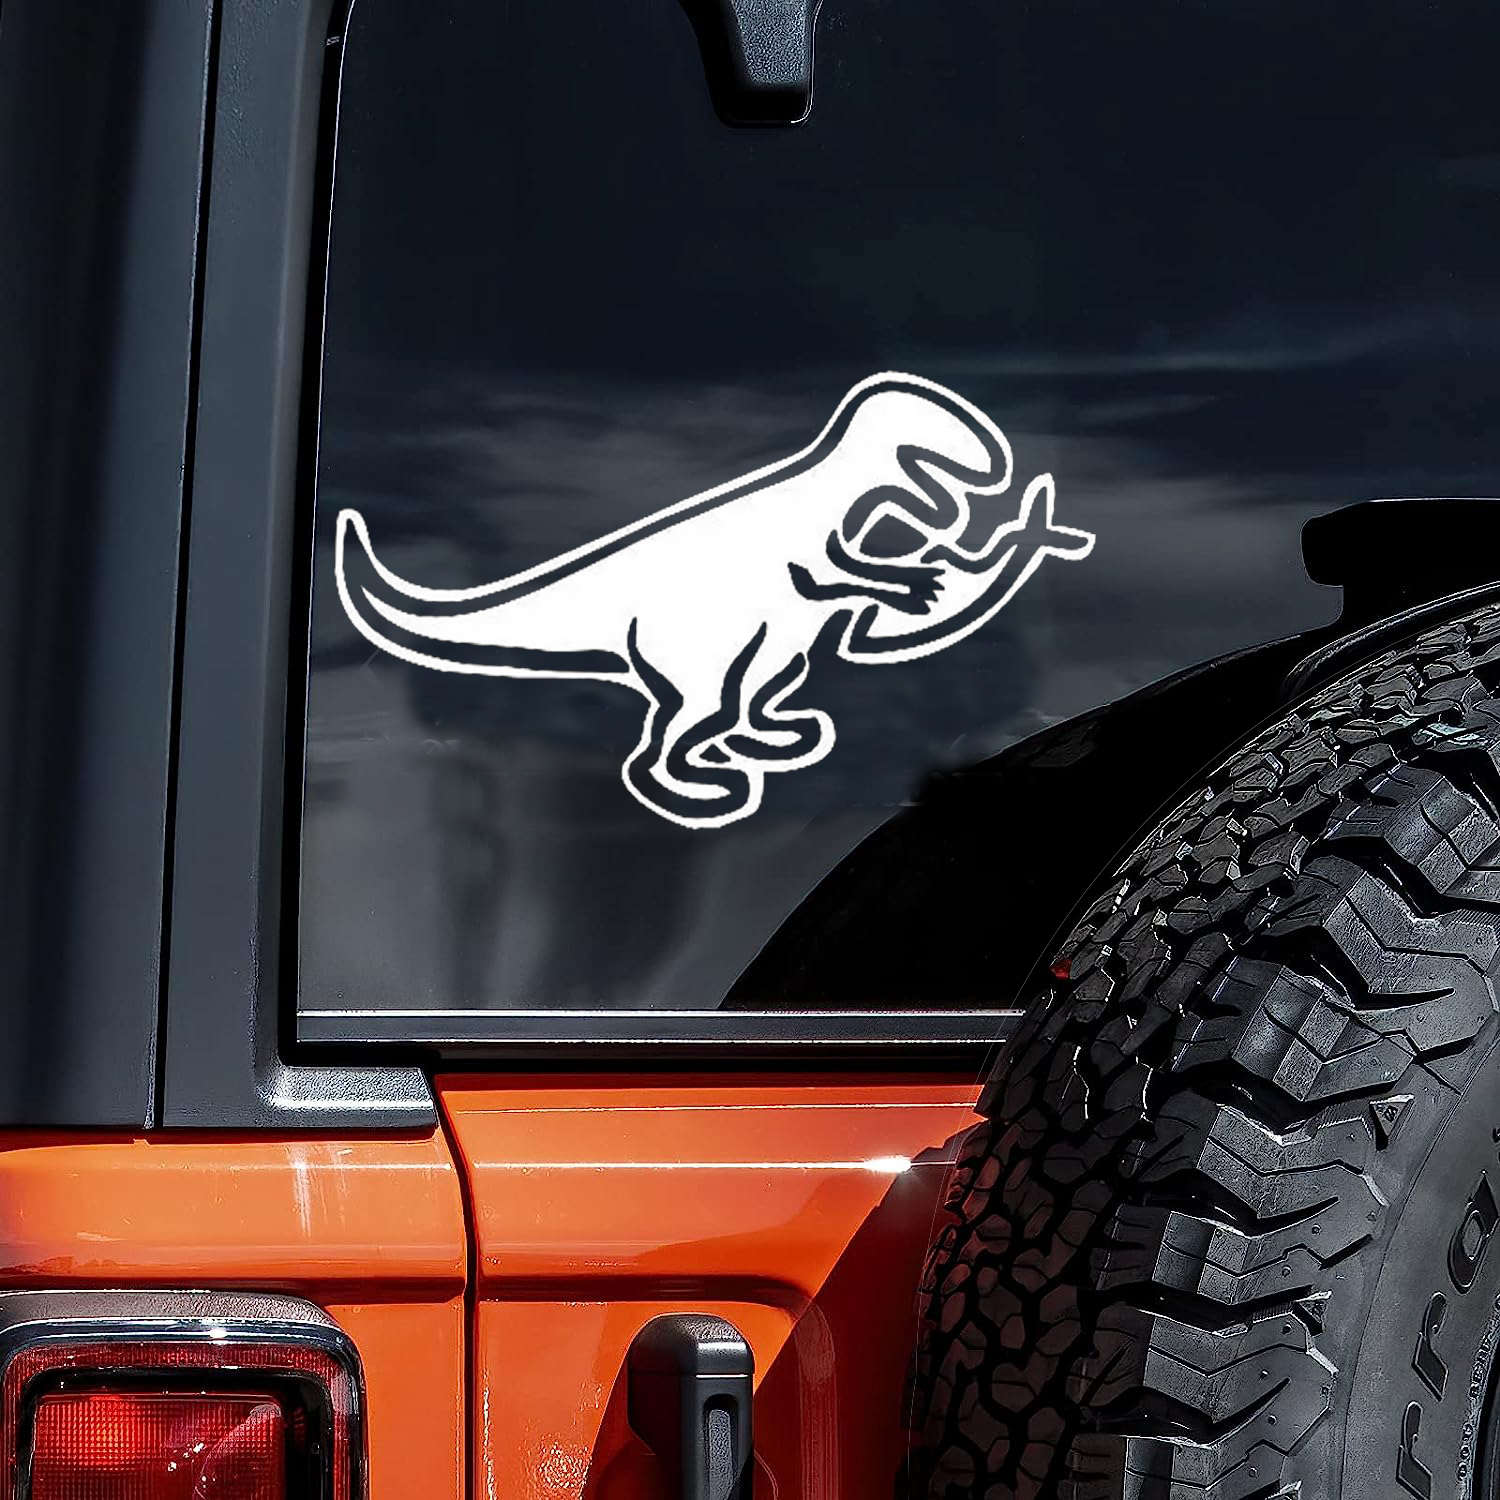 Dinosaur Eating Fish Design Car Sticker For Laptop, Truck, Phone